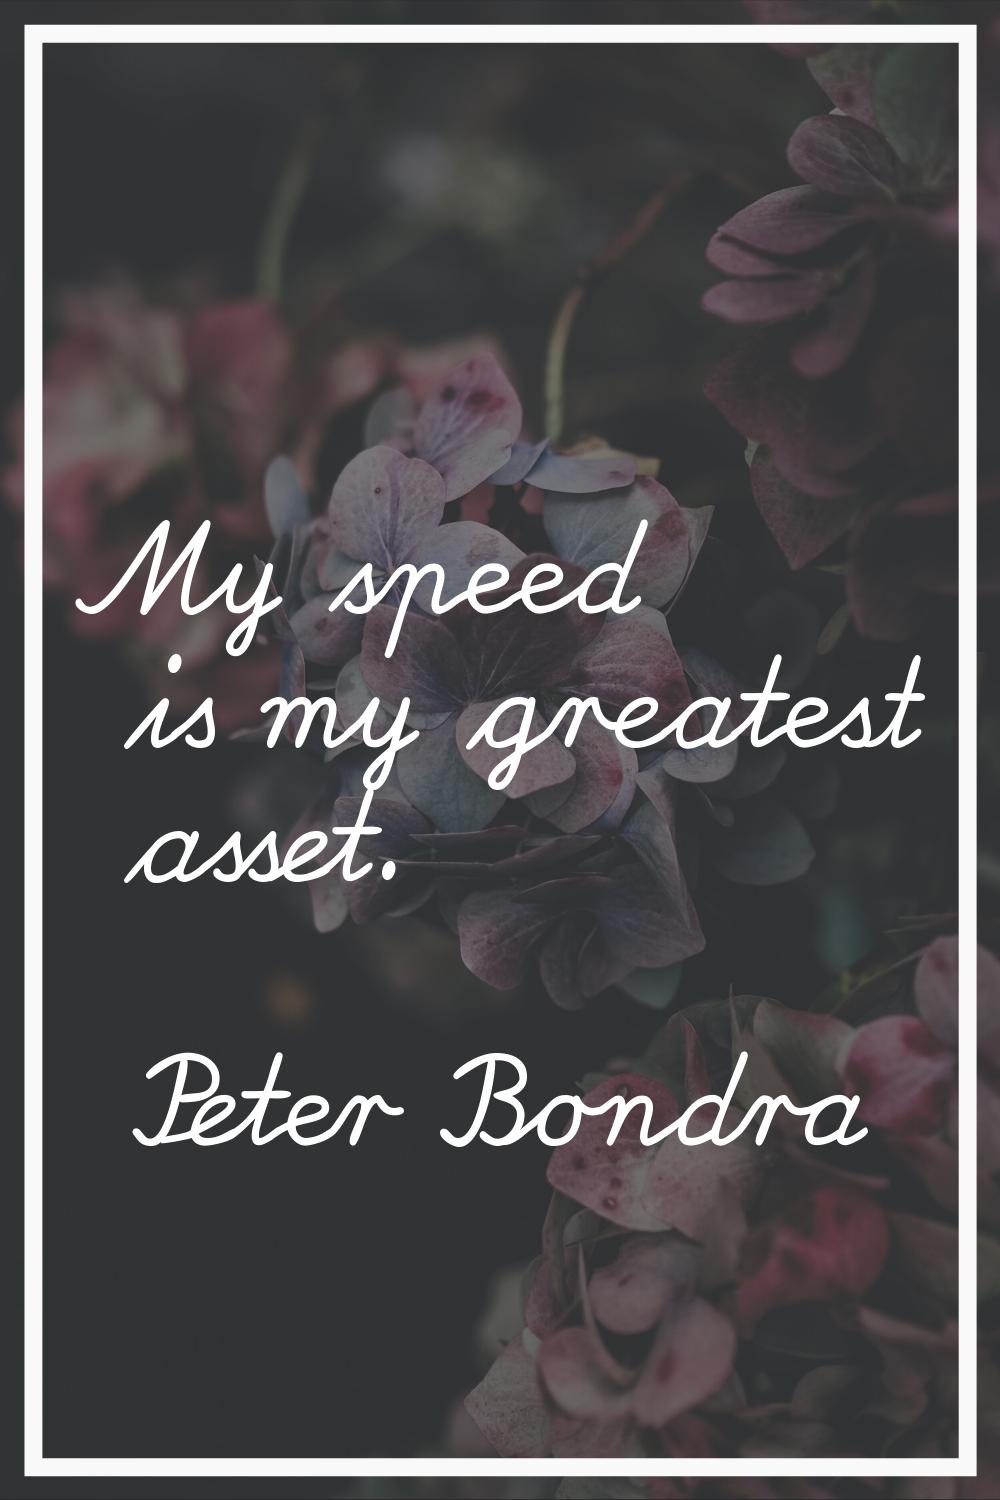 My speed is my greatest asset.